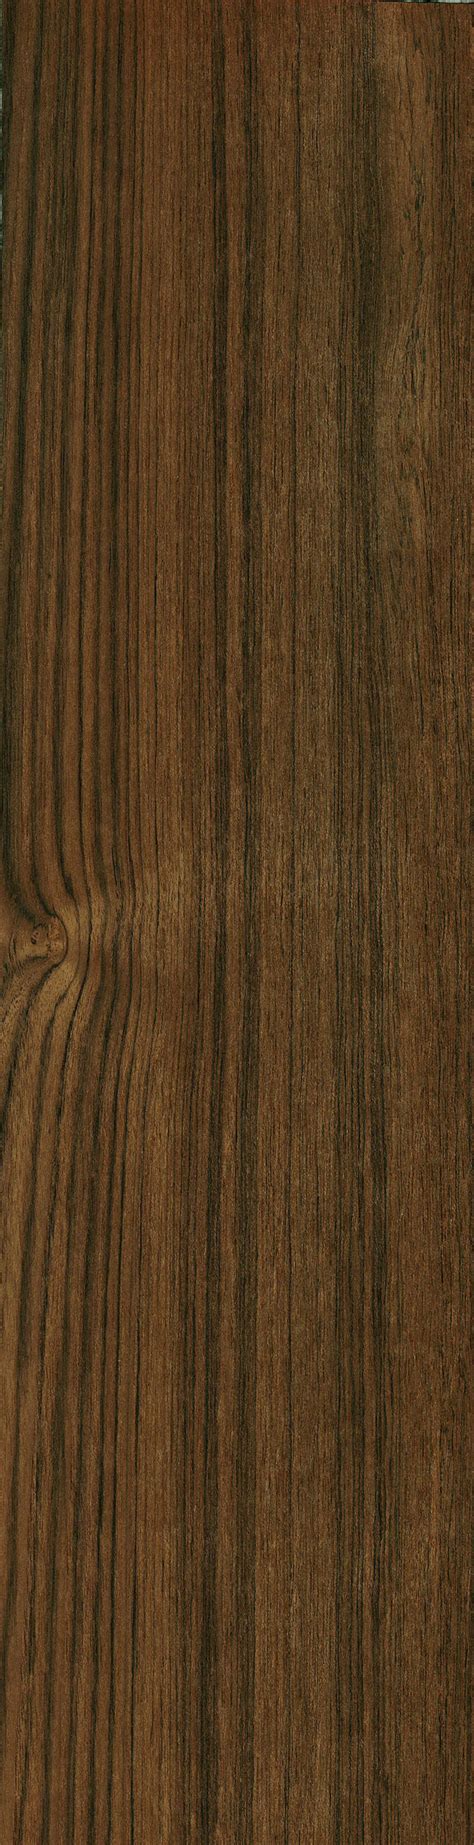 Teak The Wood Database Lumber Identification Hardwood